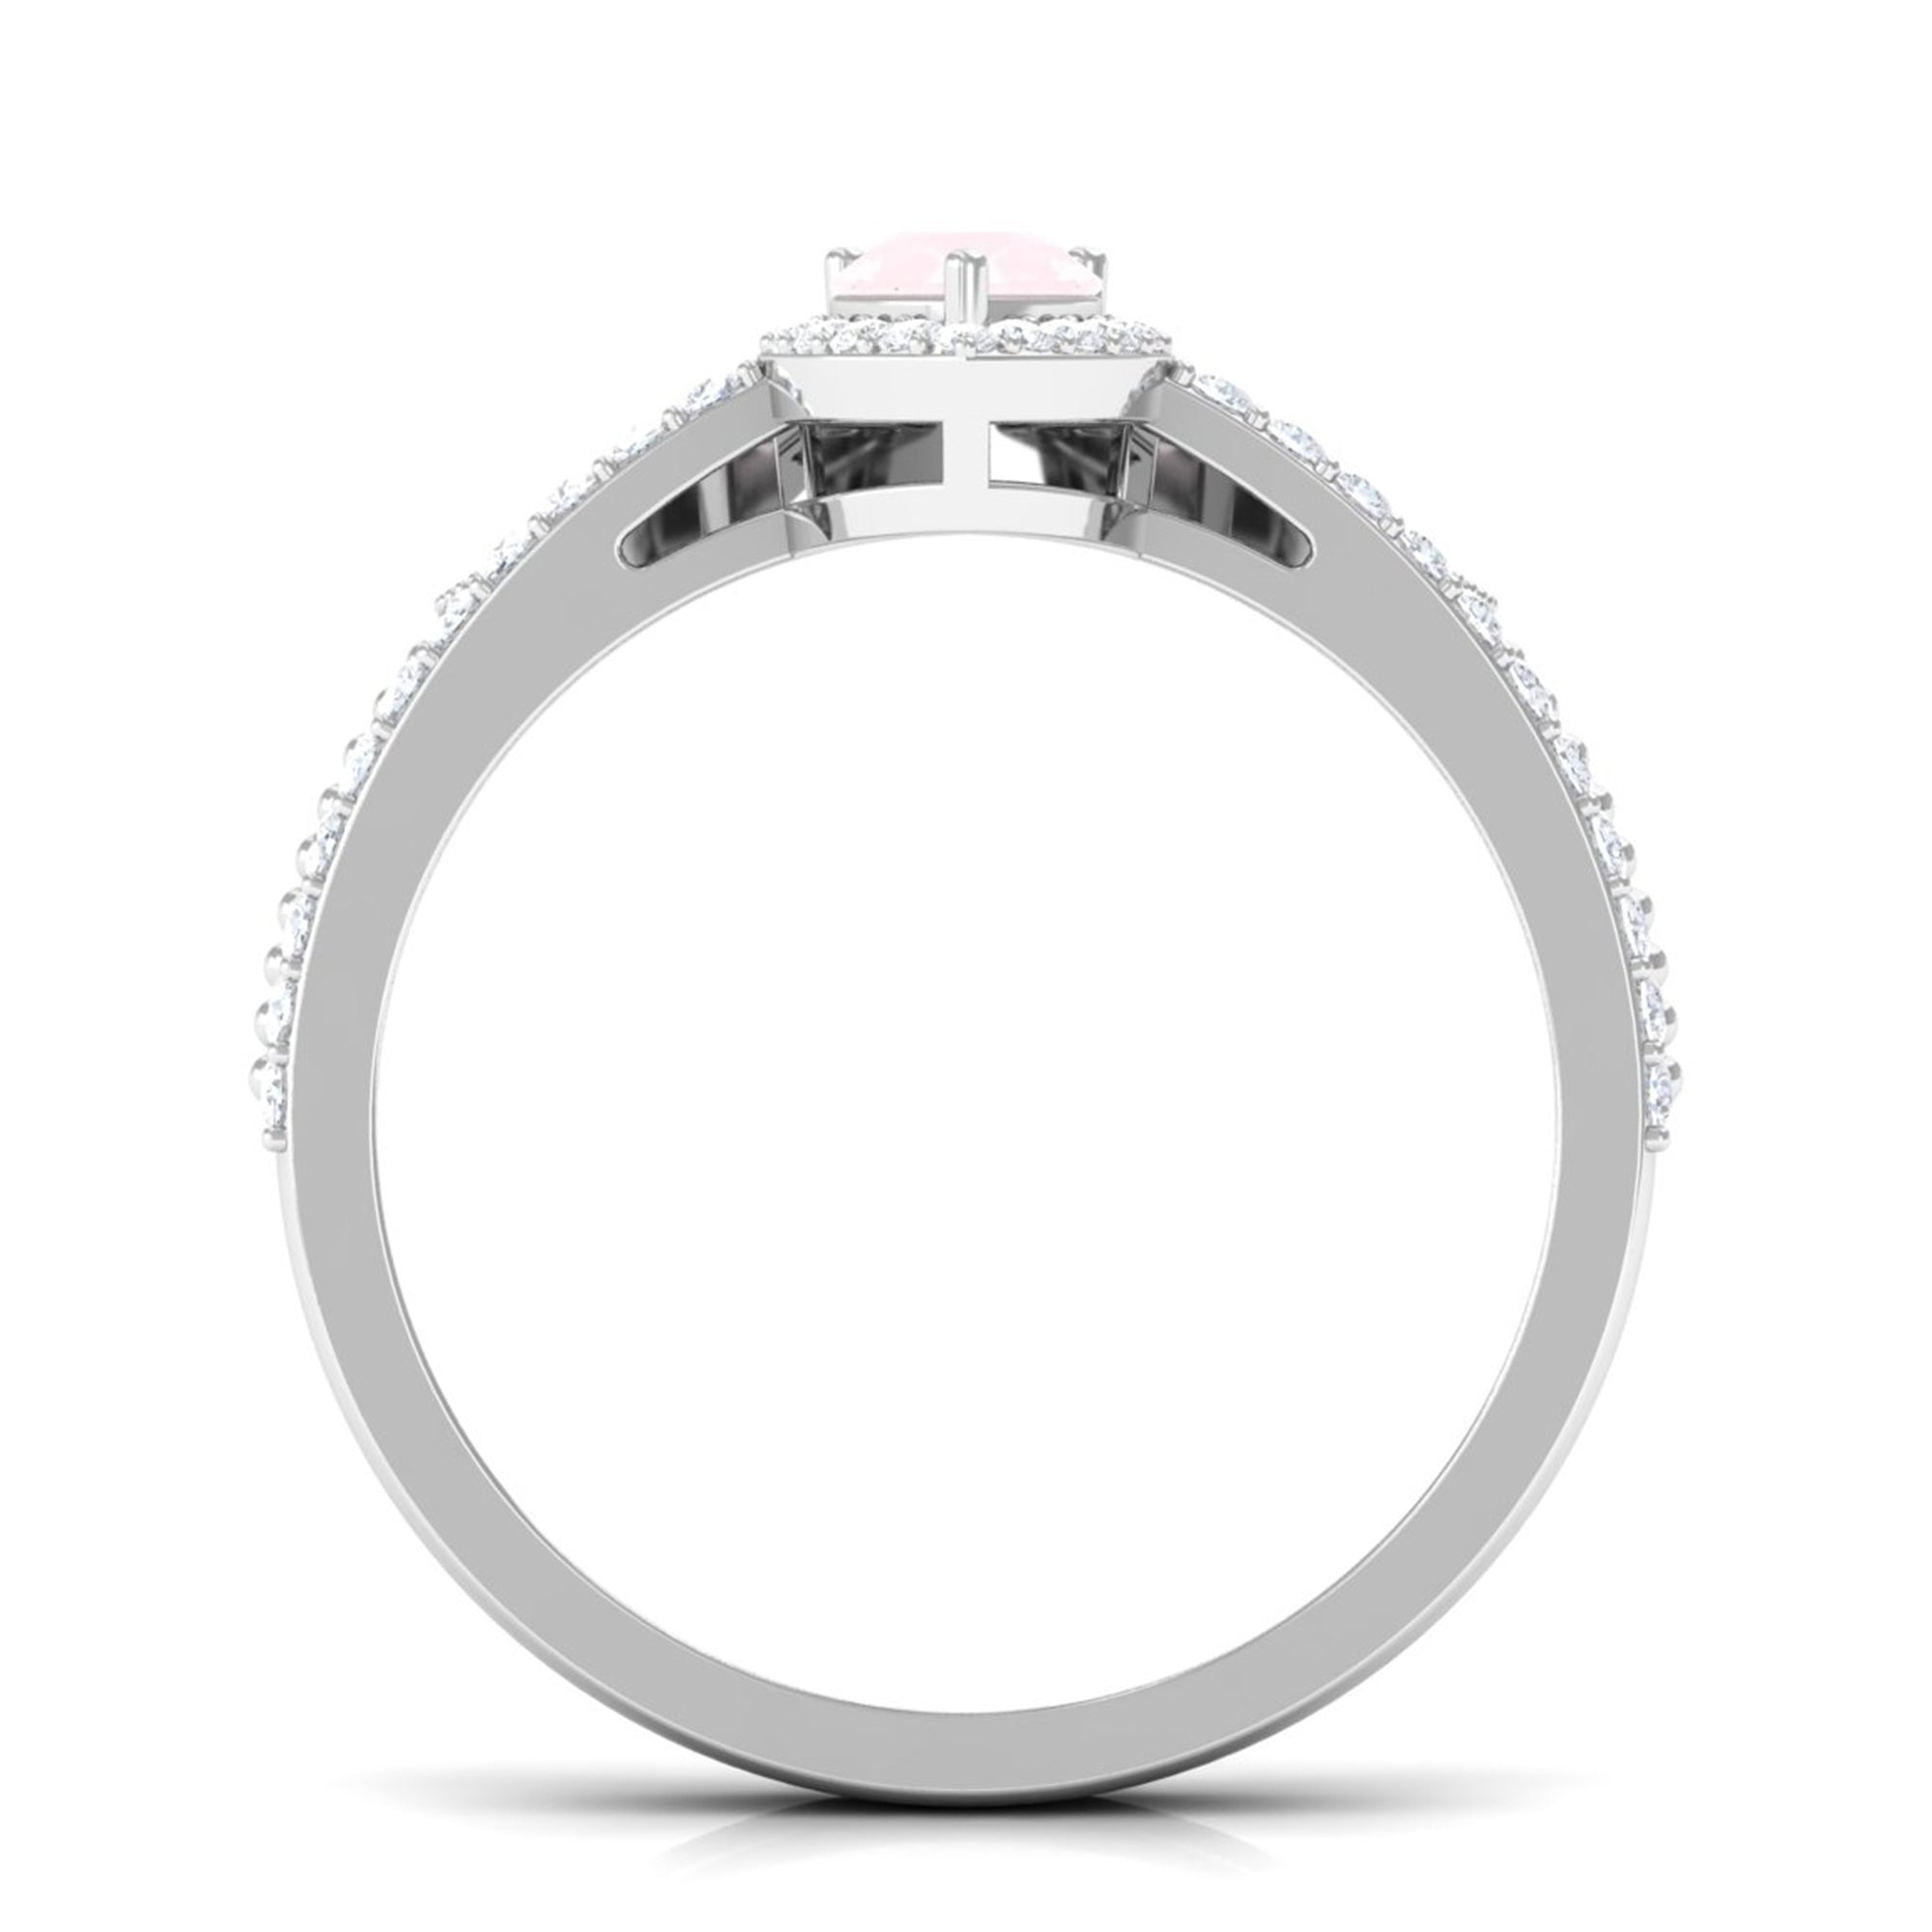 Vintage Inspired Rose Quartz Teardrop Wedding Ring Set with Diamond Rose Quartz - ( AAA ) - Quality - Rosec Jewels